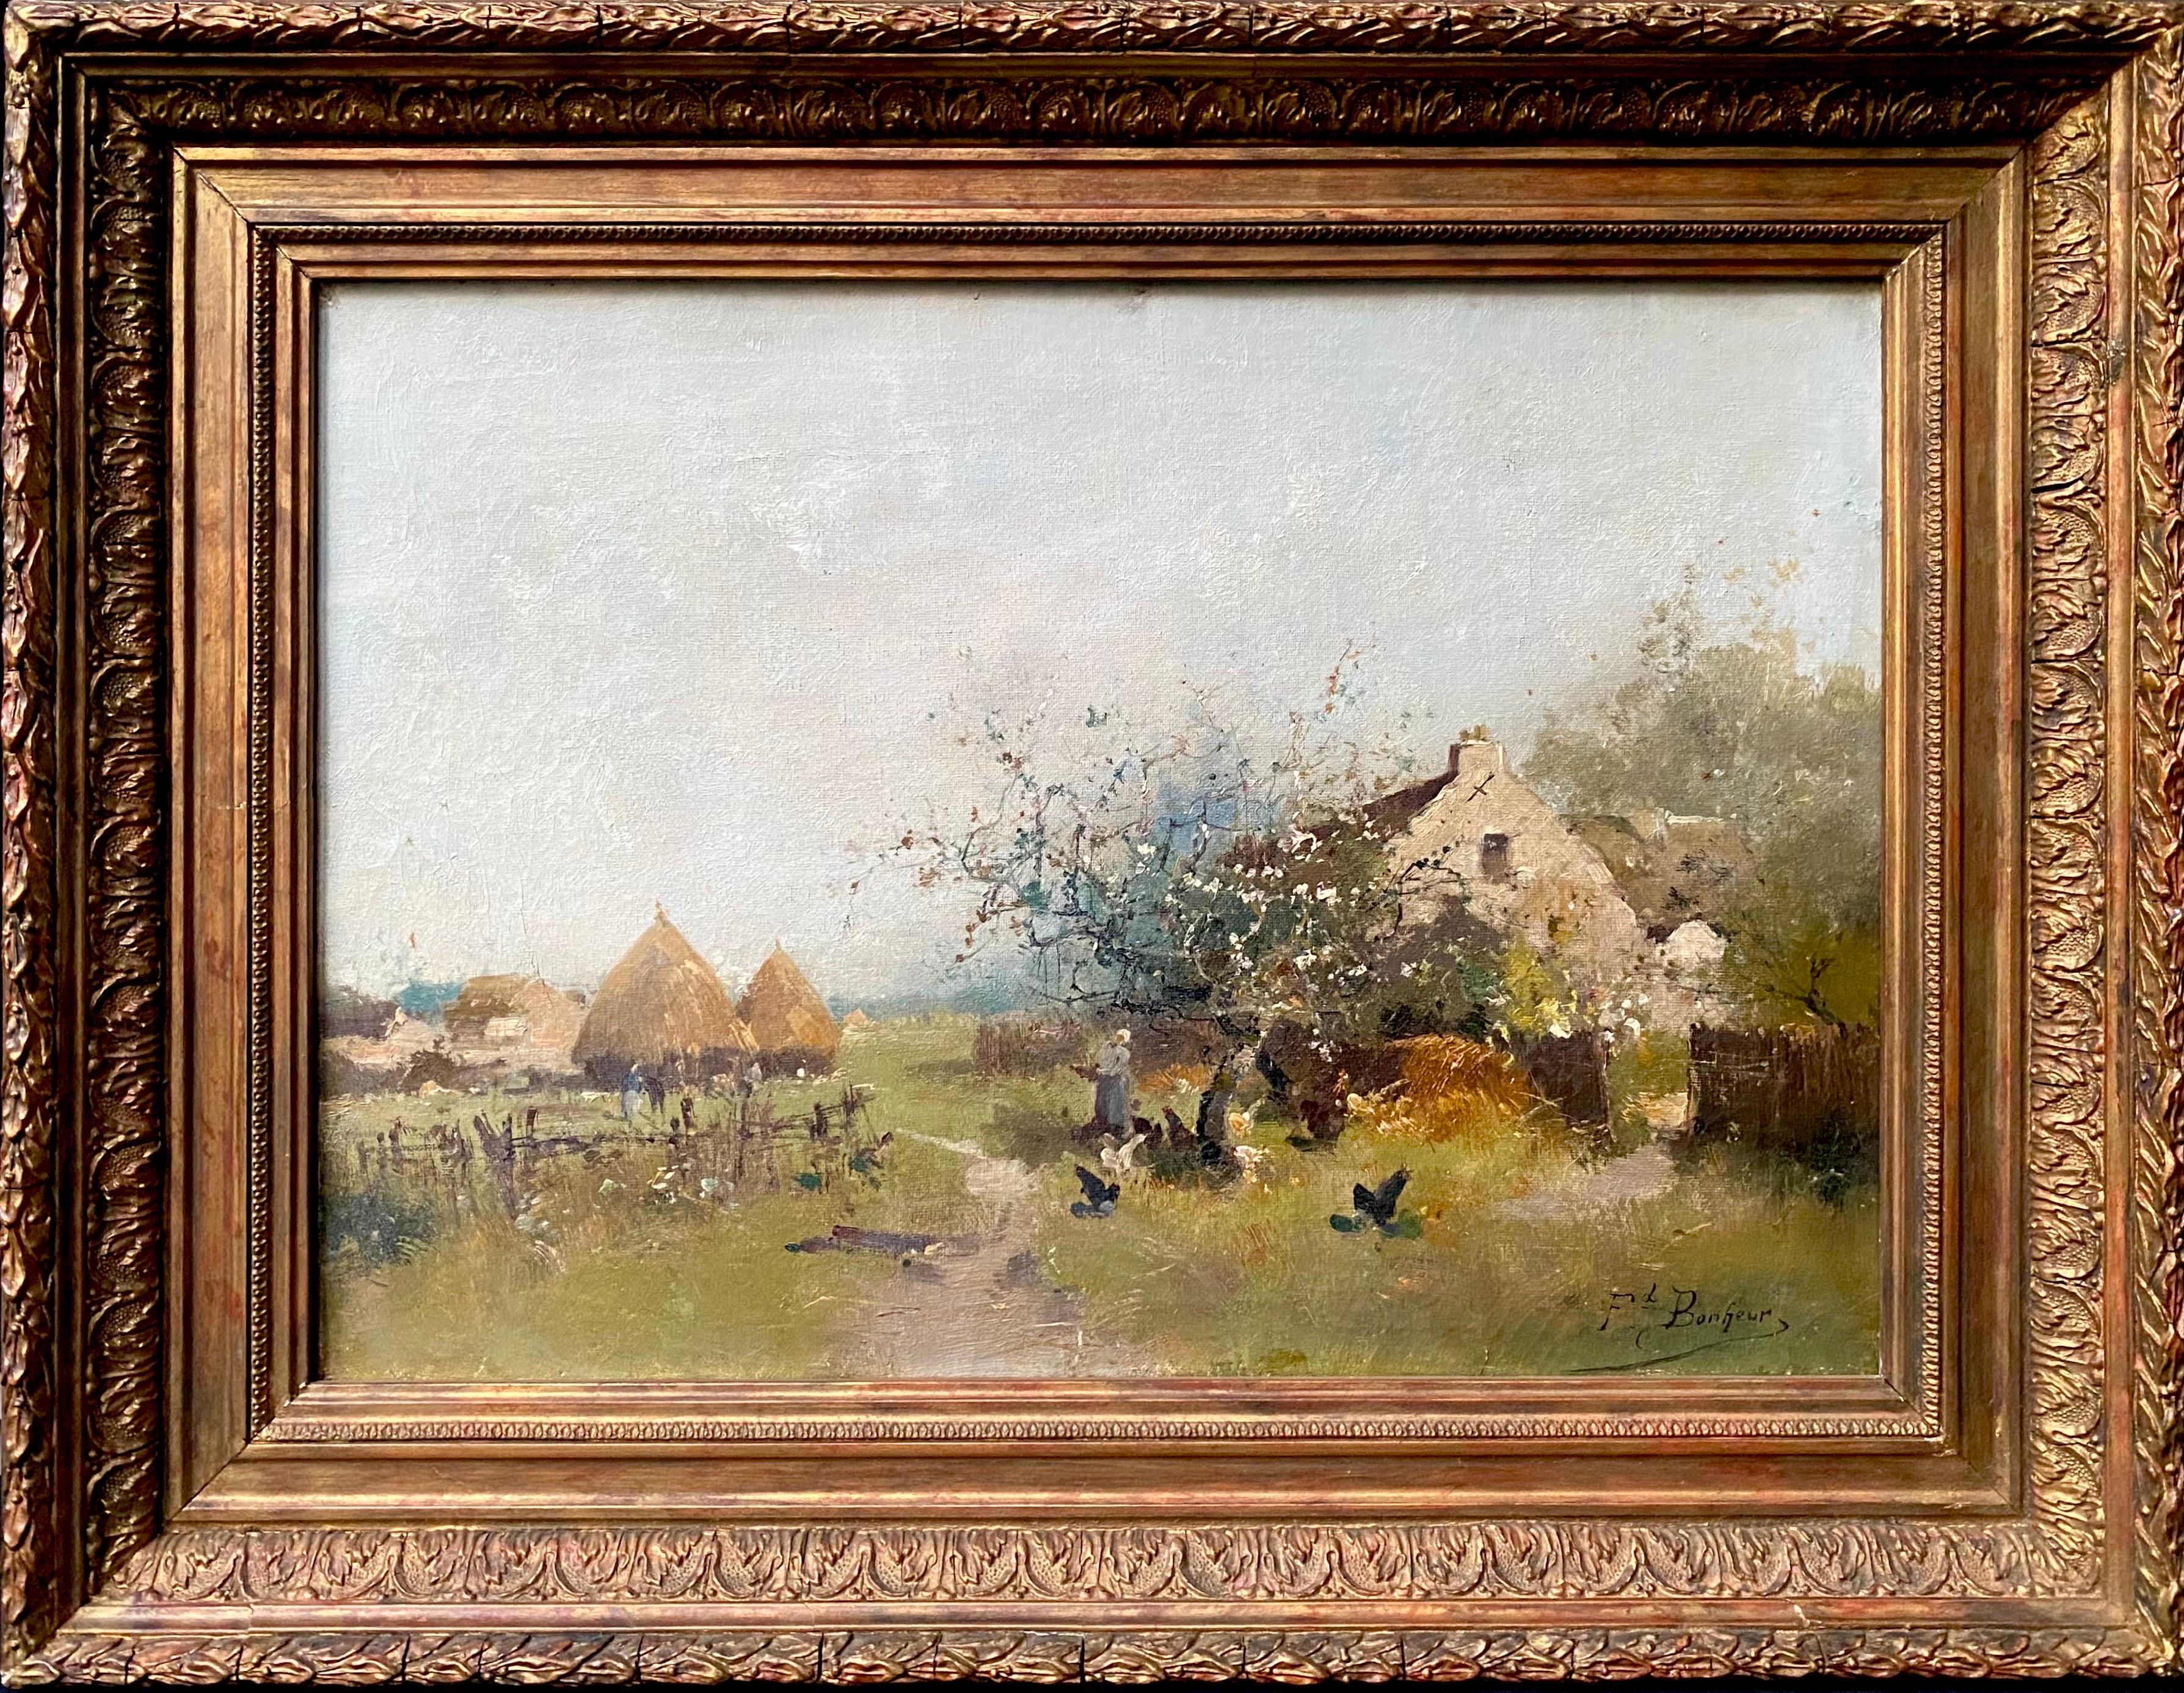 Ferdinand Bonheur Landscape Painting - 19th century French impressionist painting - The cherry tree - landscape Bonheur